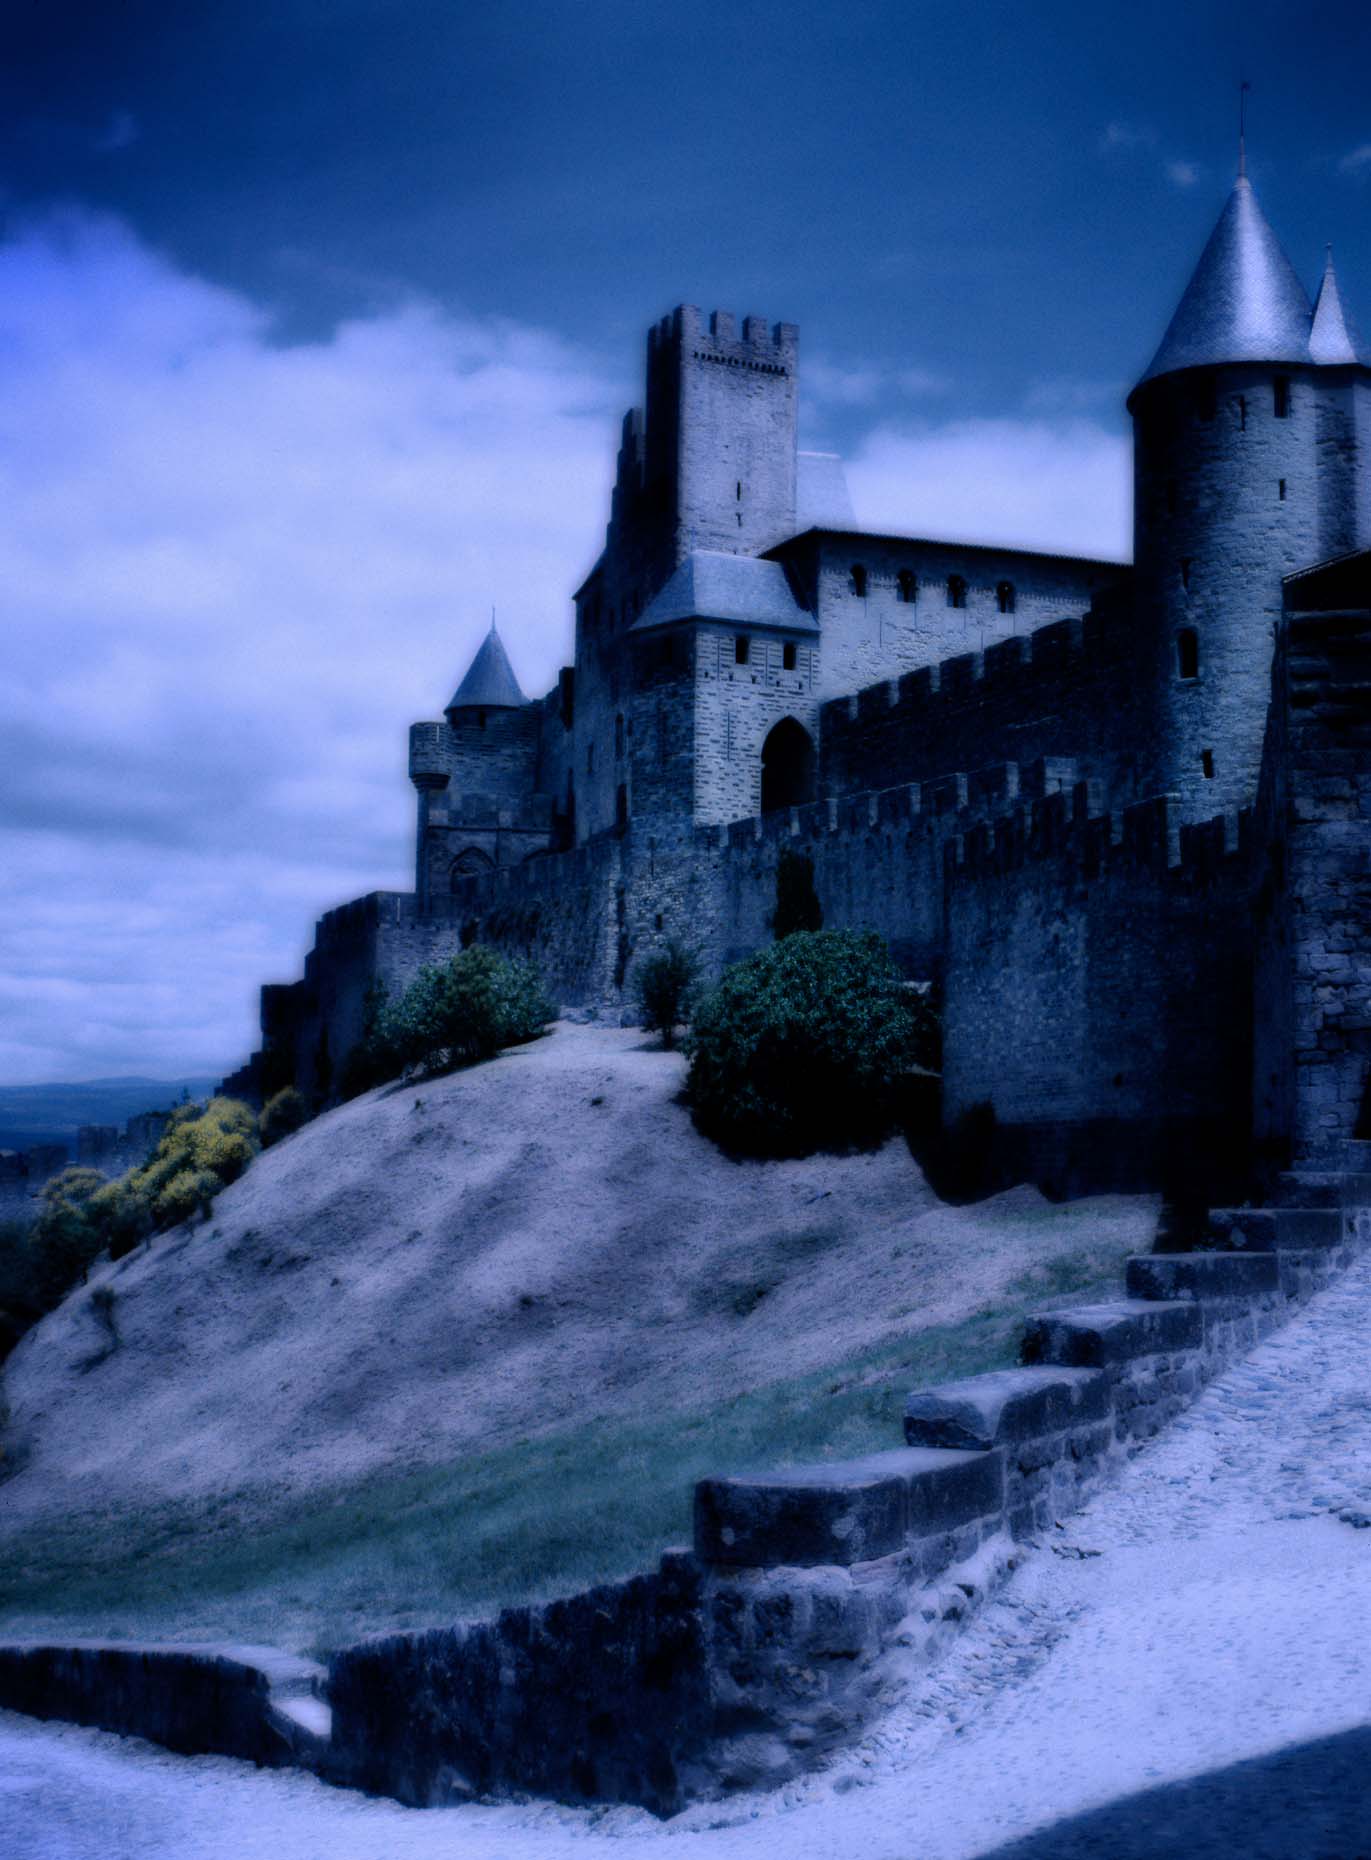 Castle.jpg